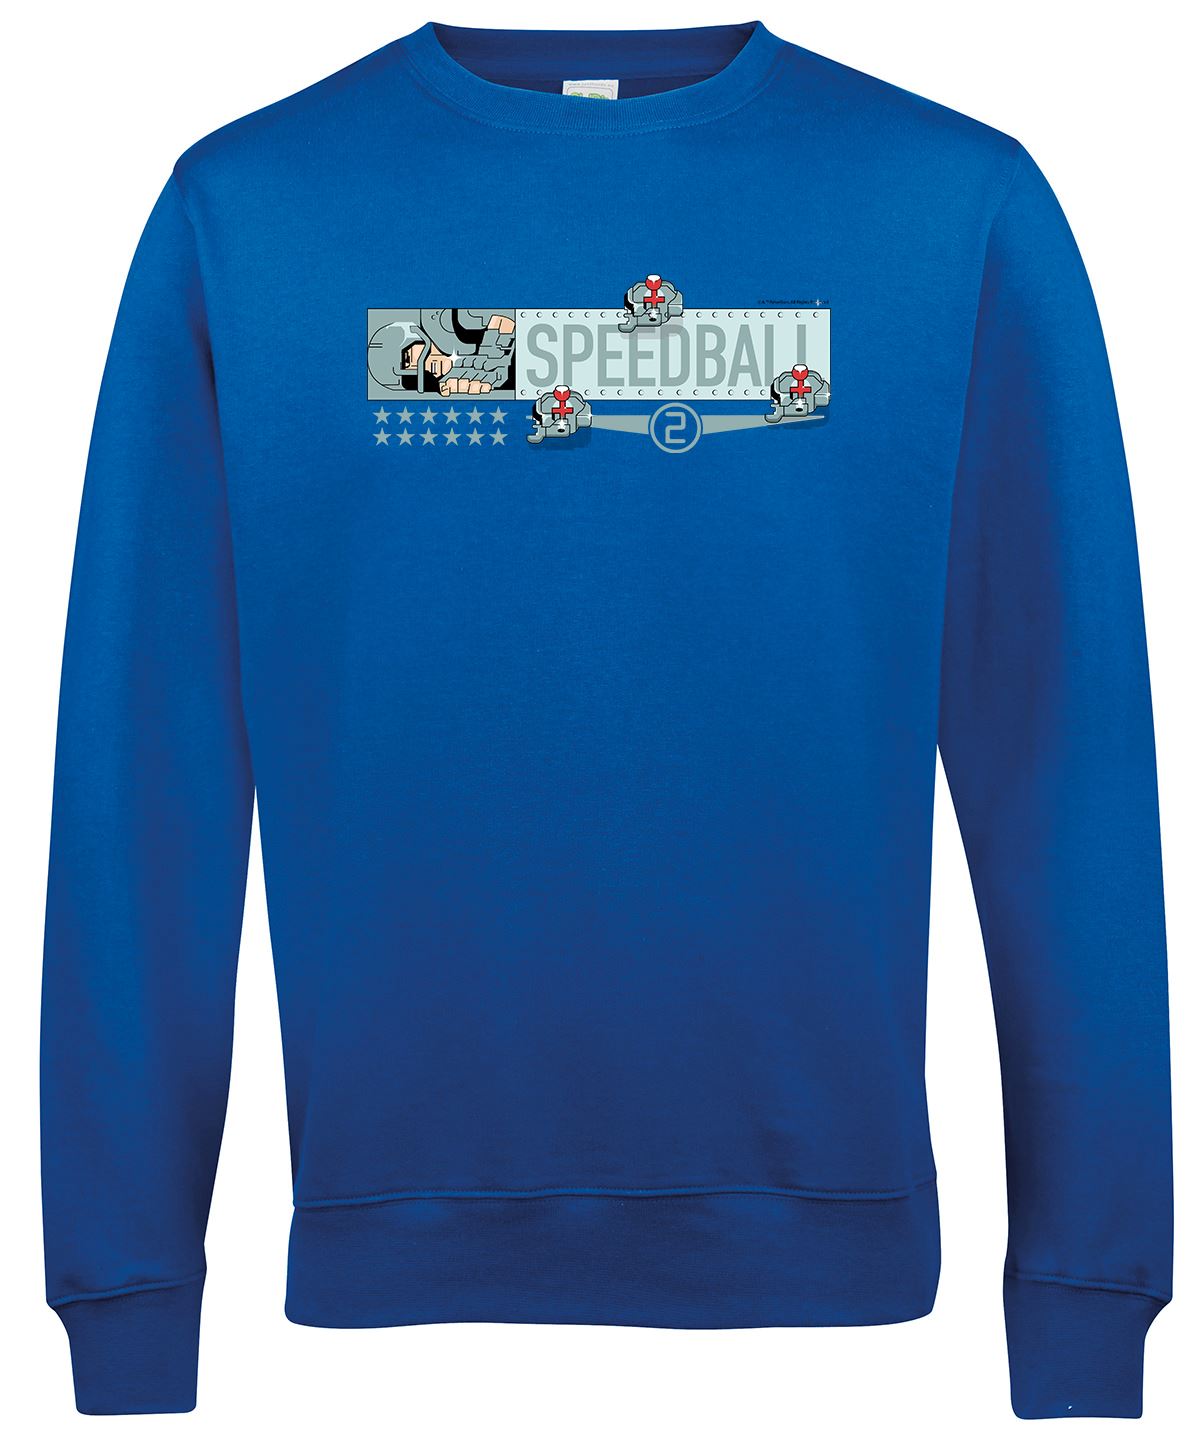 Speedball 2 Ice Cream Ice Cream Retro Gaming Sweatshirt Sweatshirt Seven Squared Small Royal Blue 